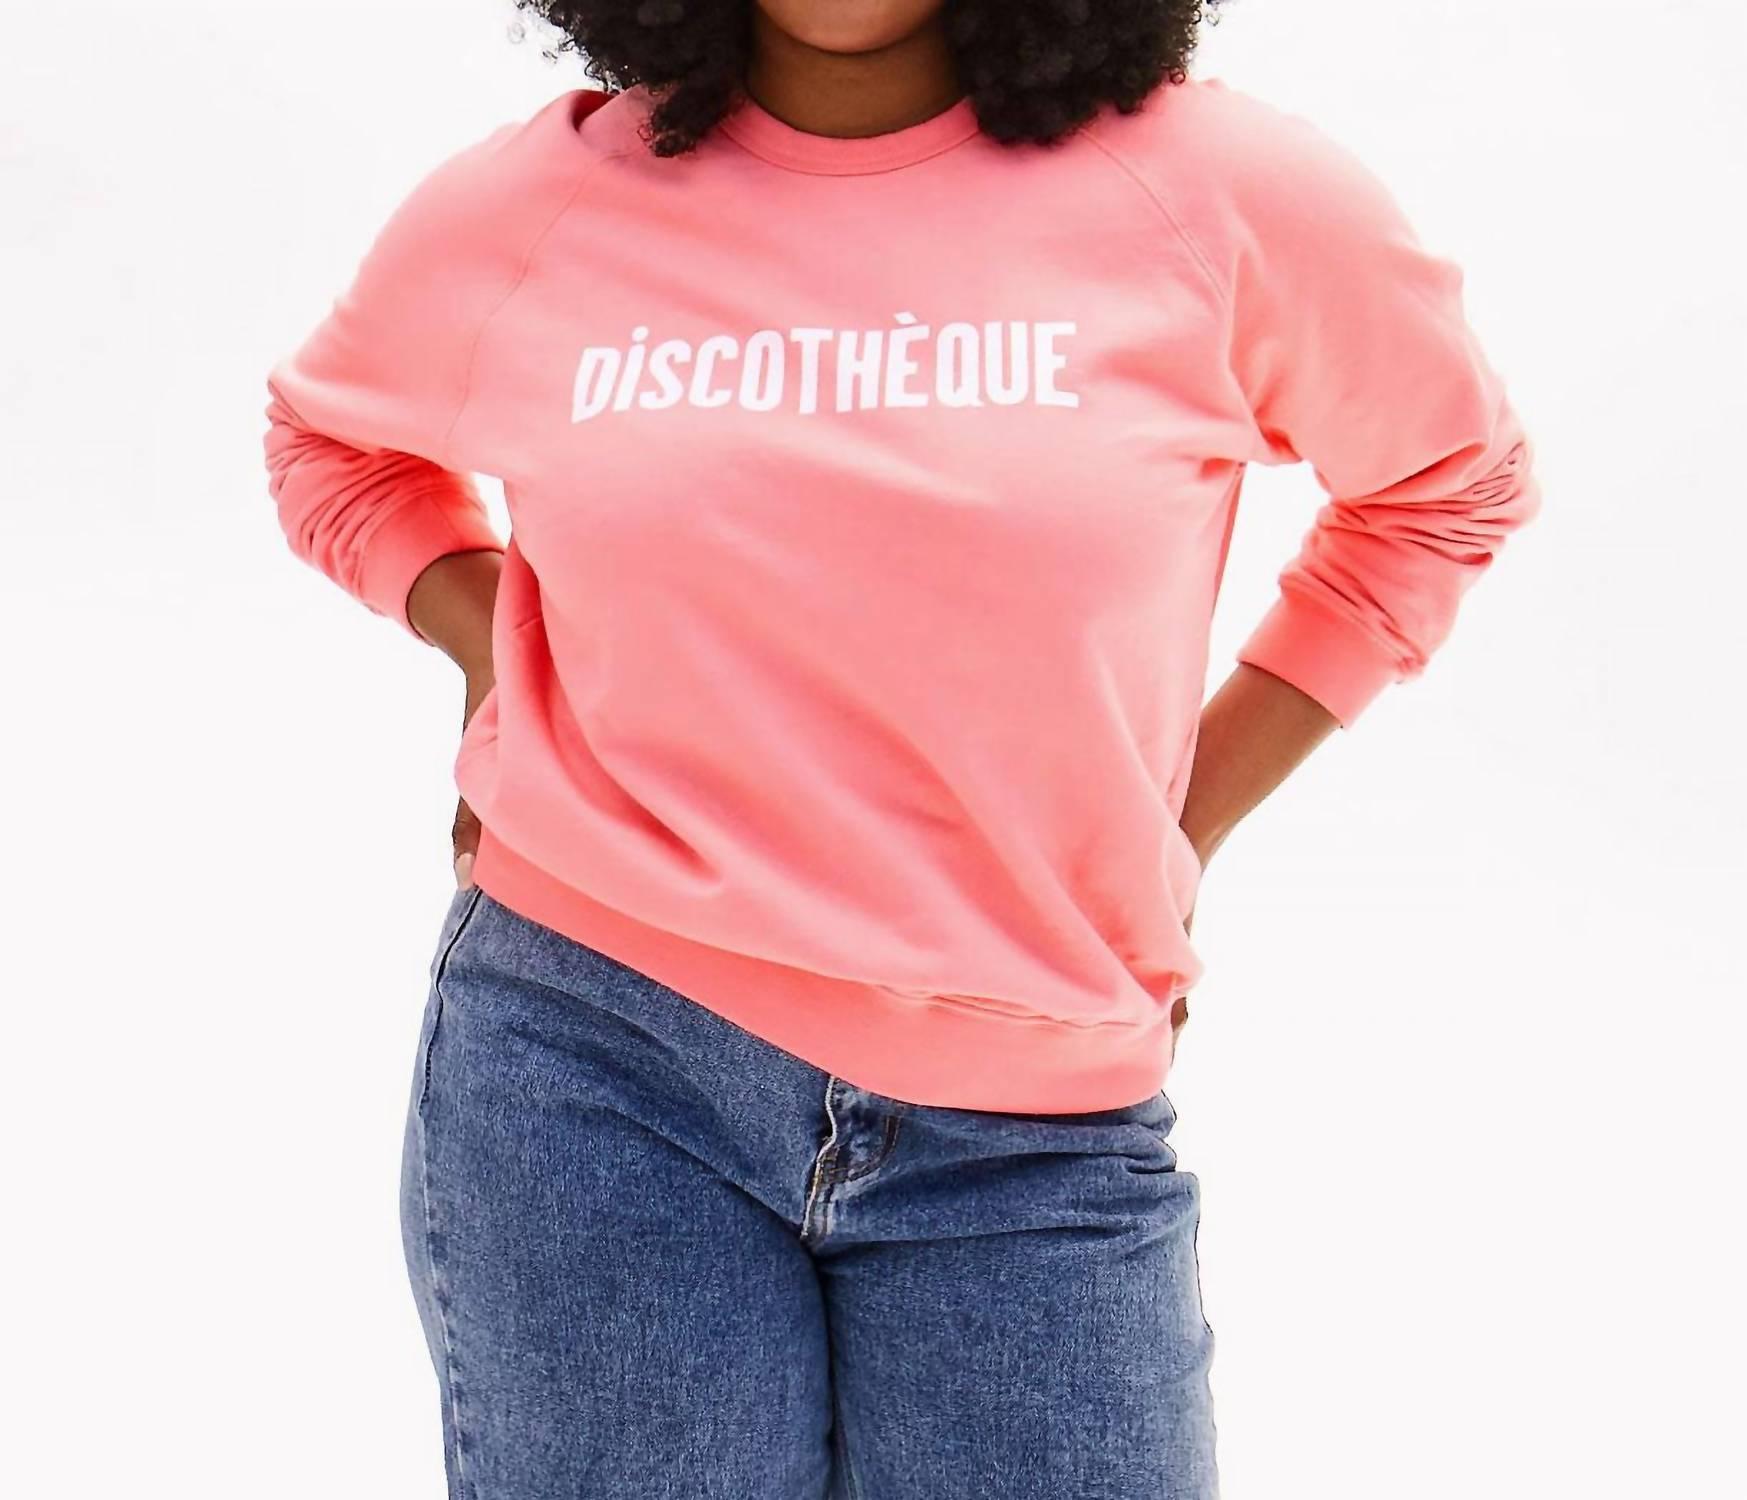 Clare V. Discotheque Sweatshirt in Pink